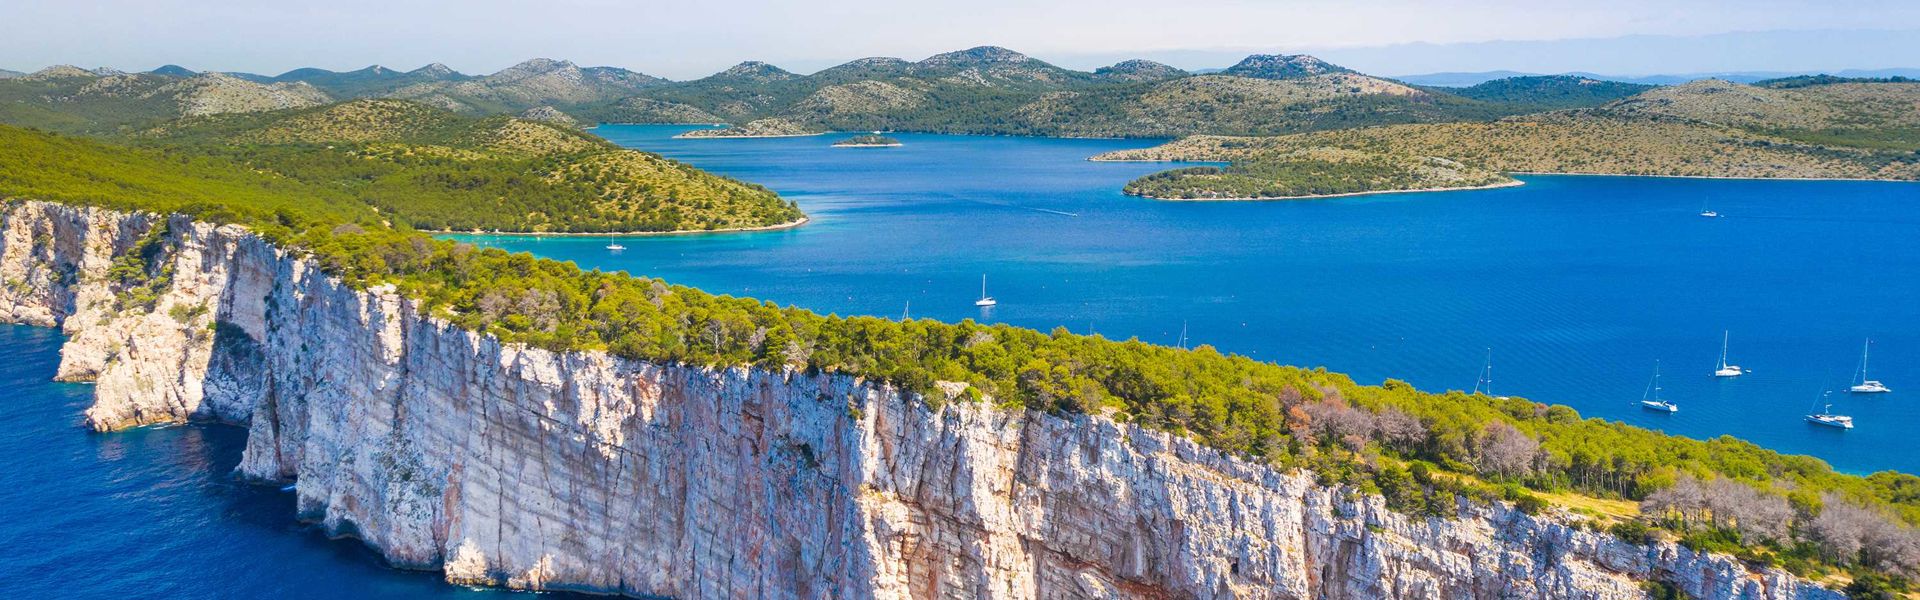 Dugi otok - najveći otok zadarskog arhipelaga | Croatia.hr